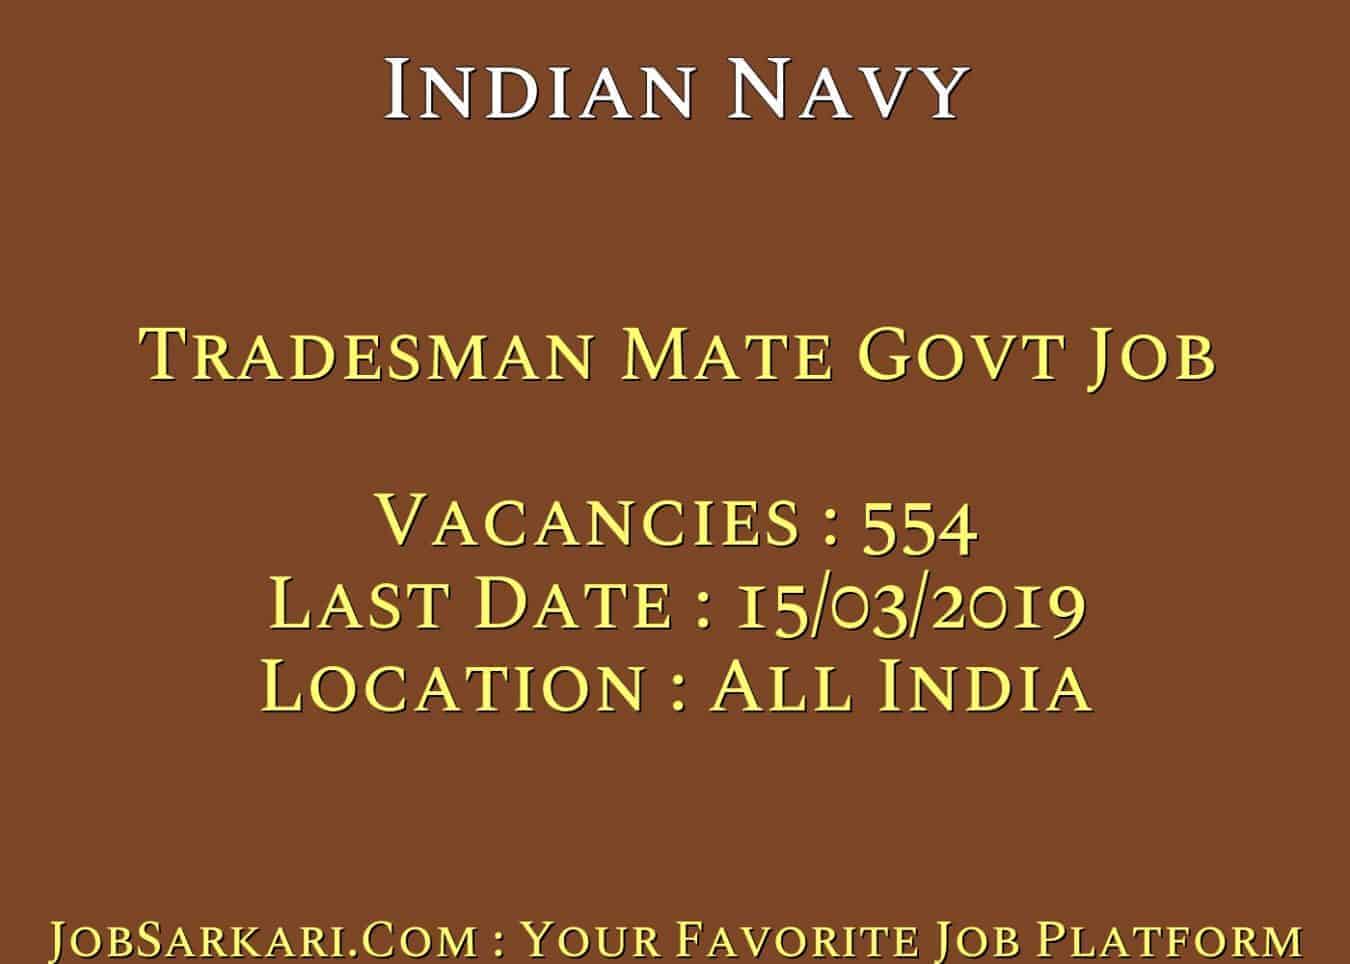 Indian Navy Recruitment 2019 For Tradesman Mate Govt Job